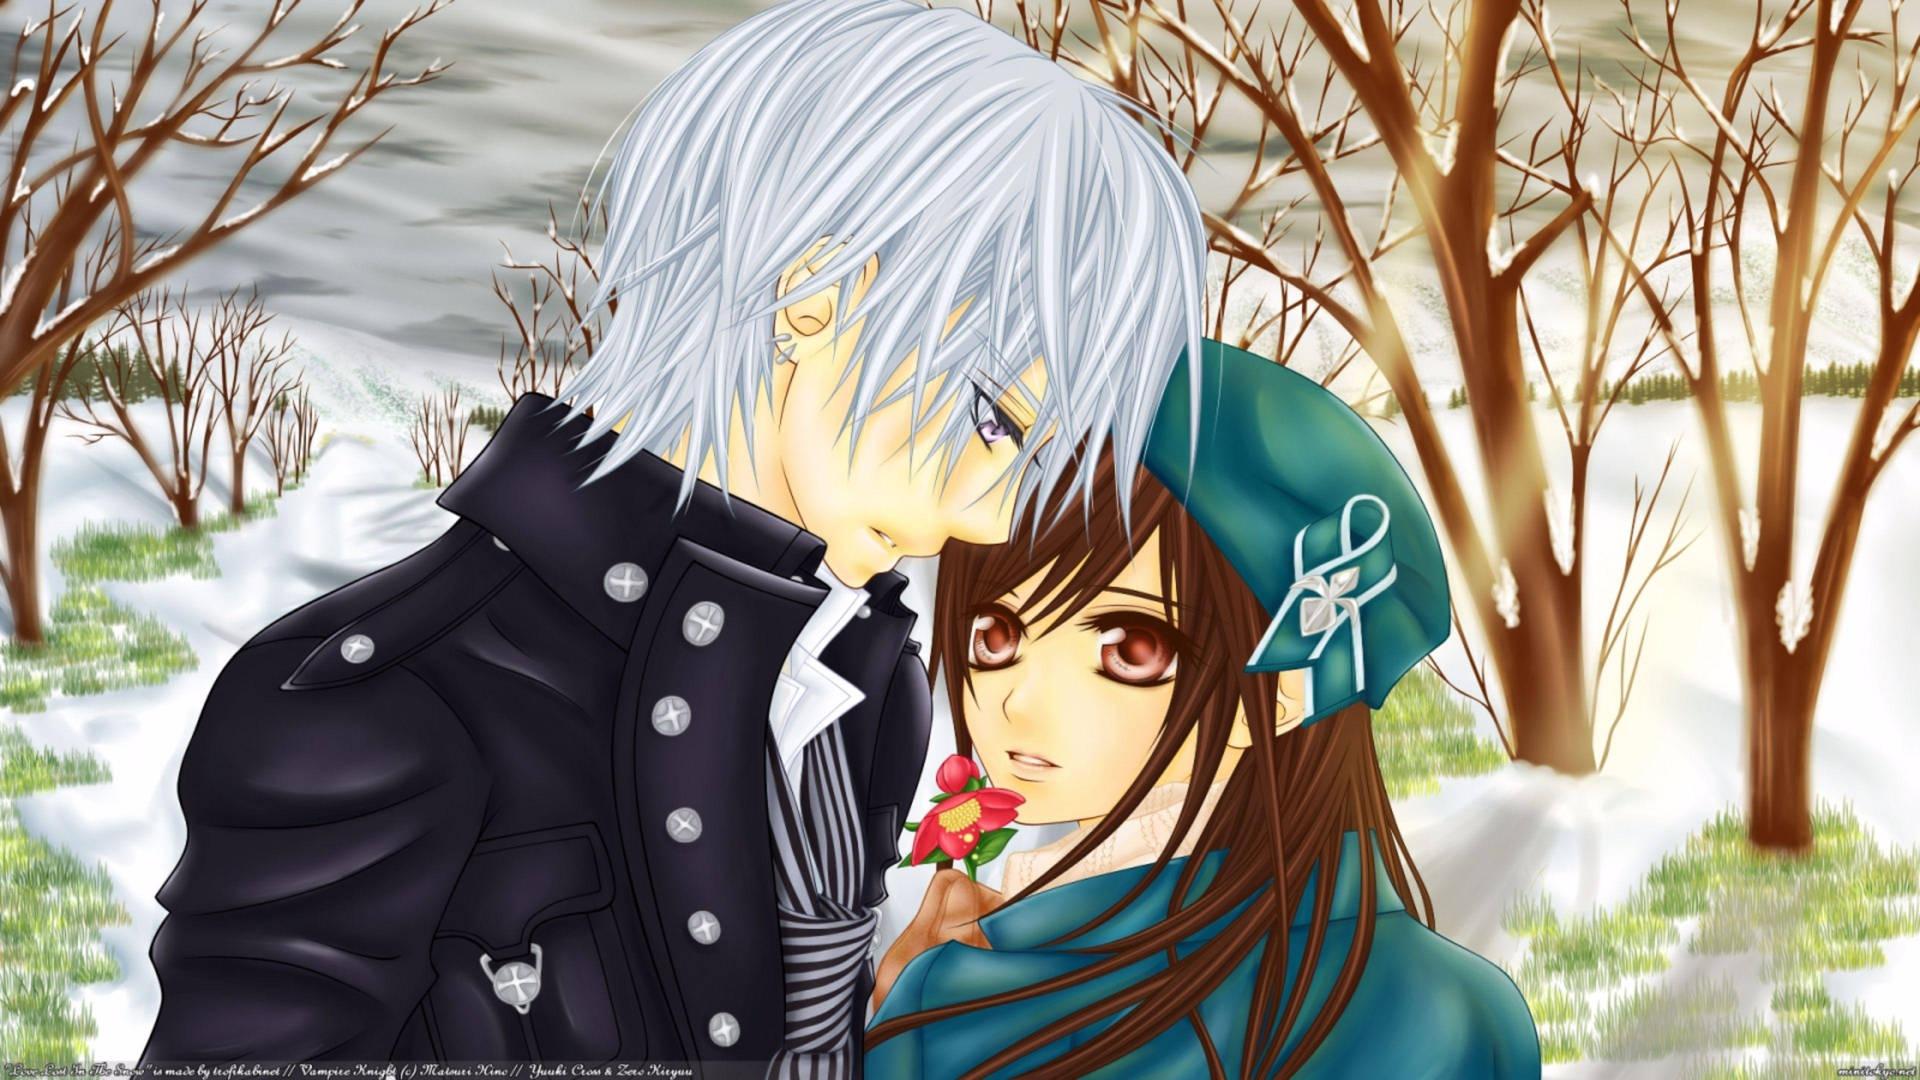 Romantic Anime Couple During Fall Season Background